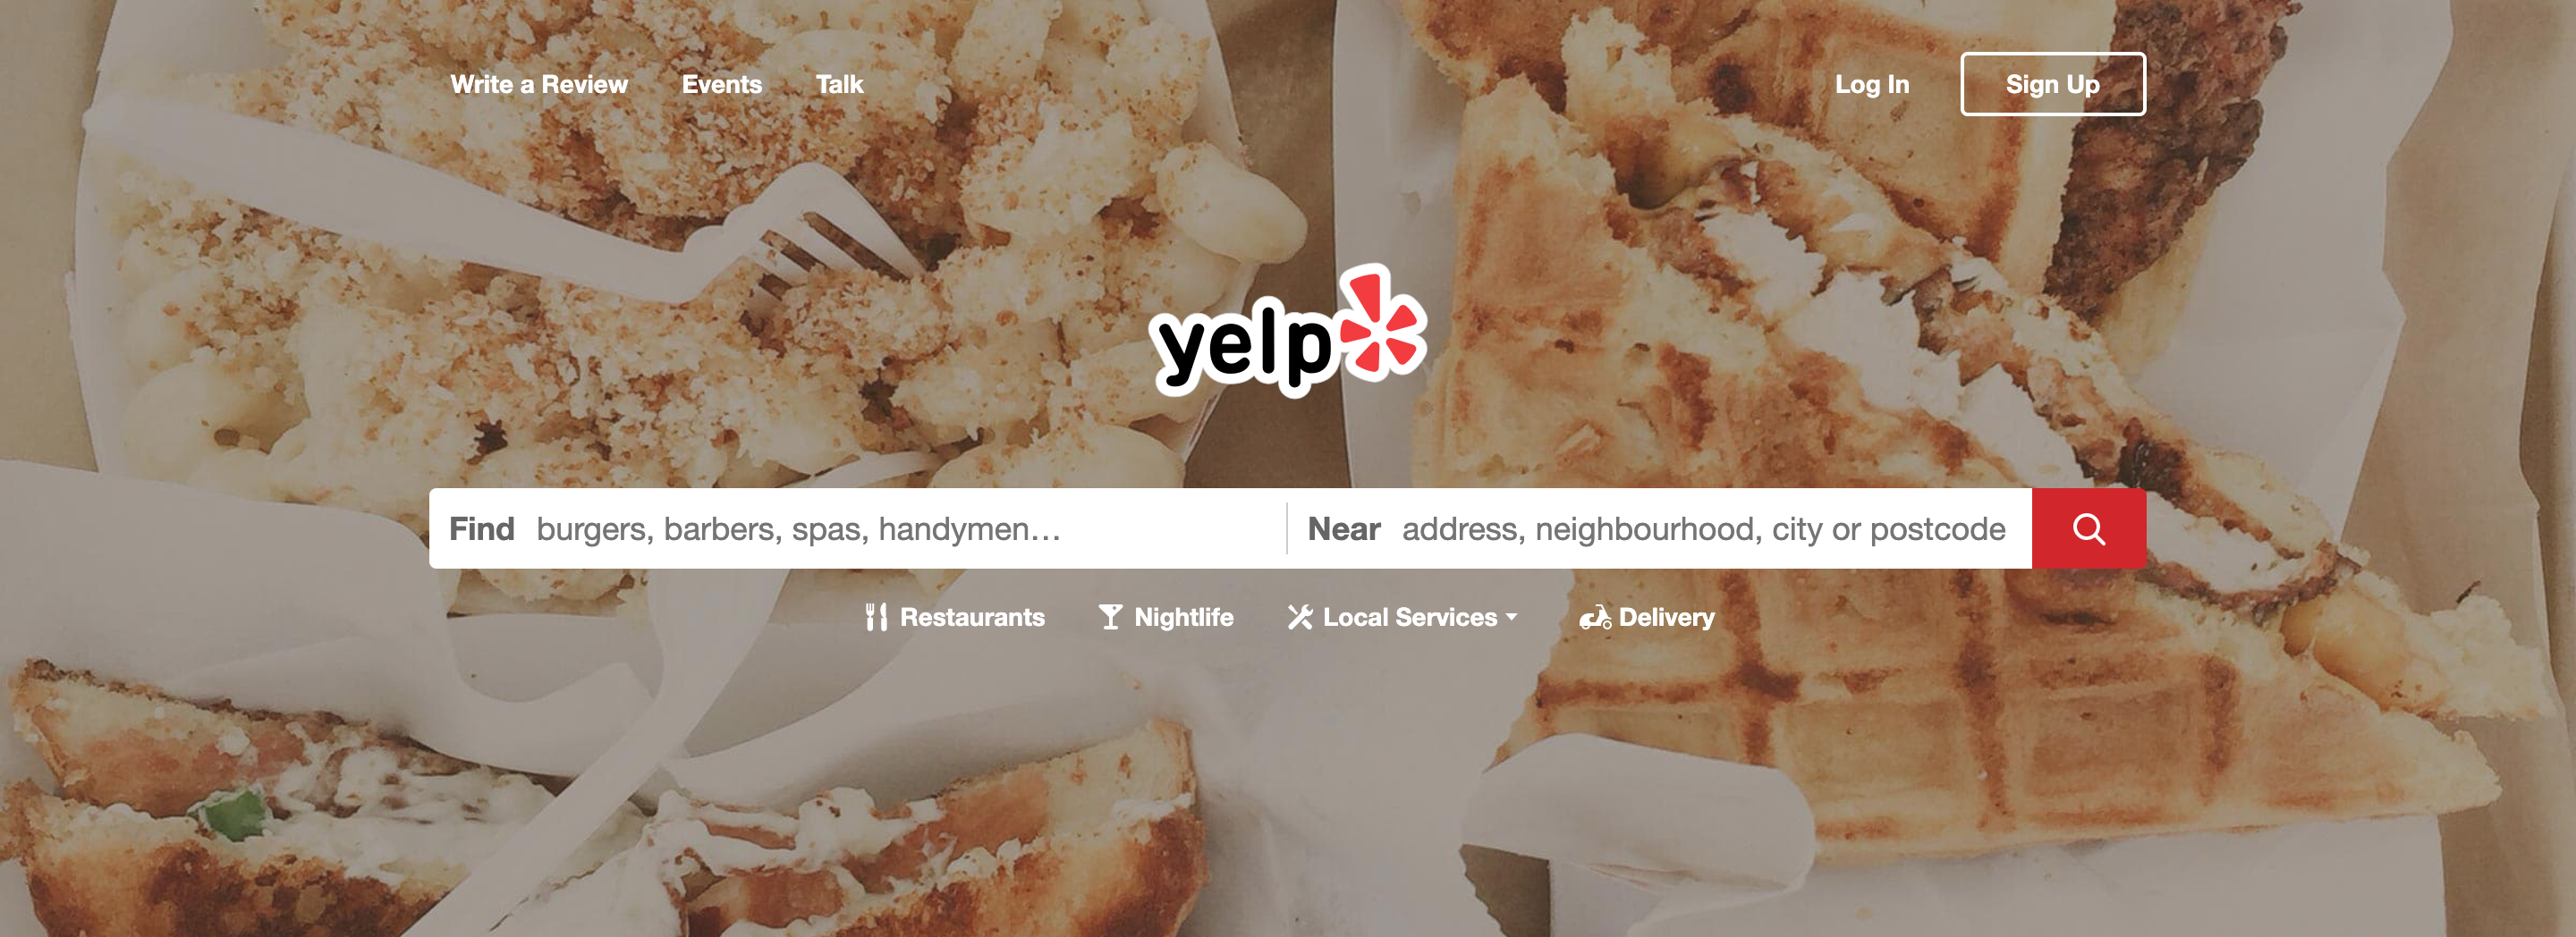 Yelp Homepage.